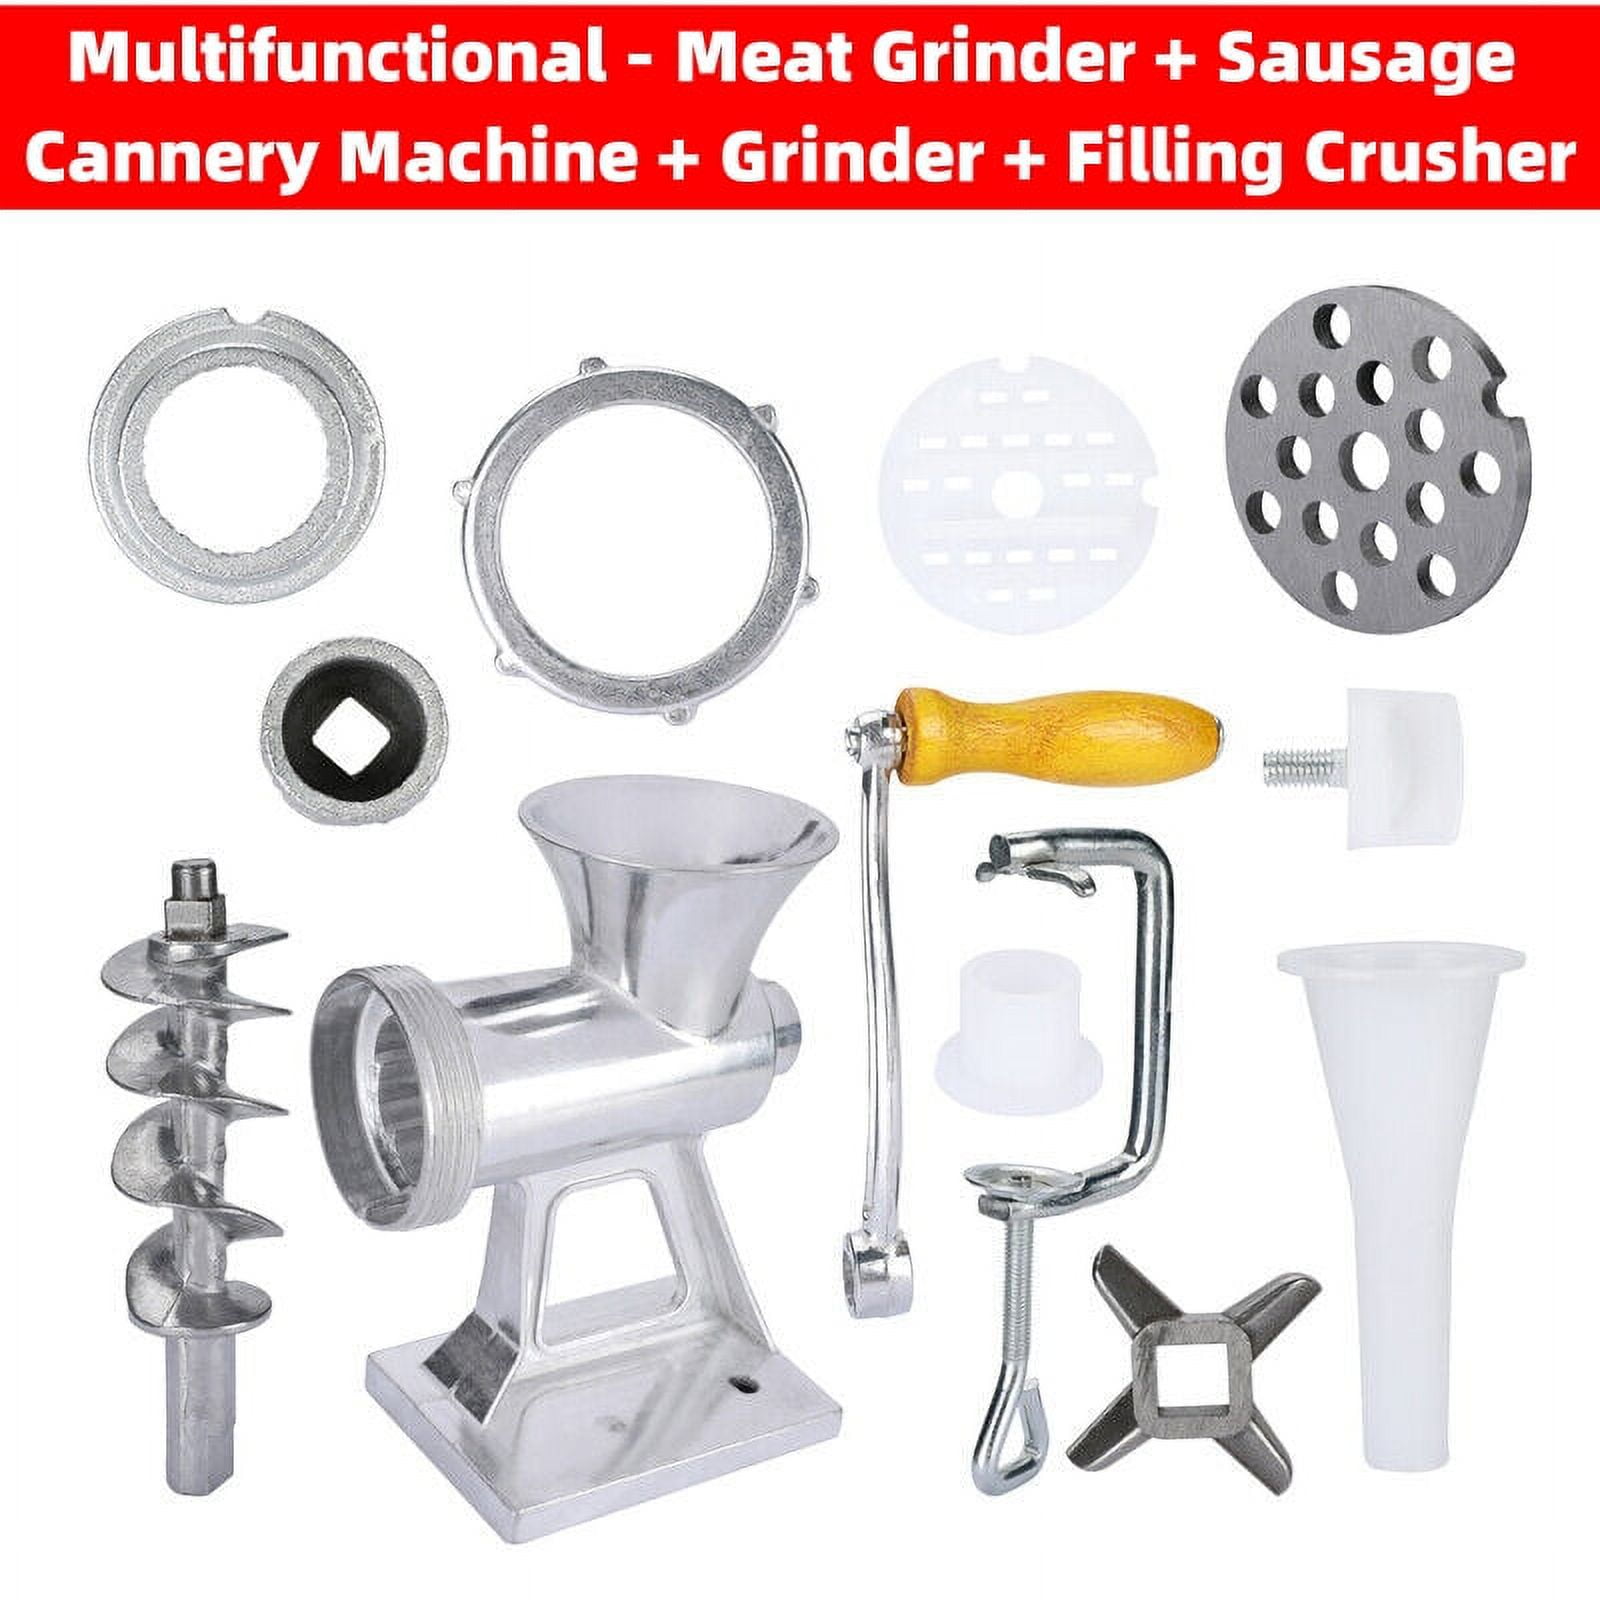 XS-003: MM-5501 Meat Grinder Parts